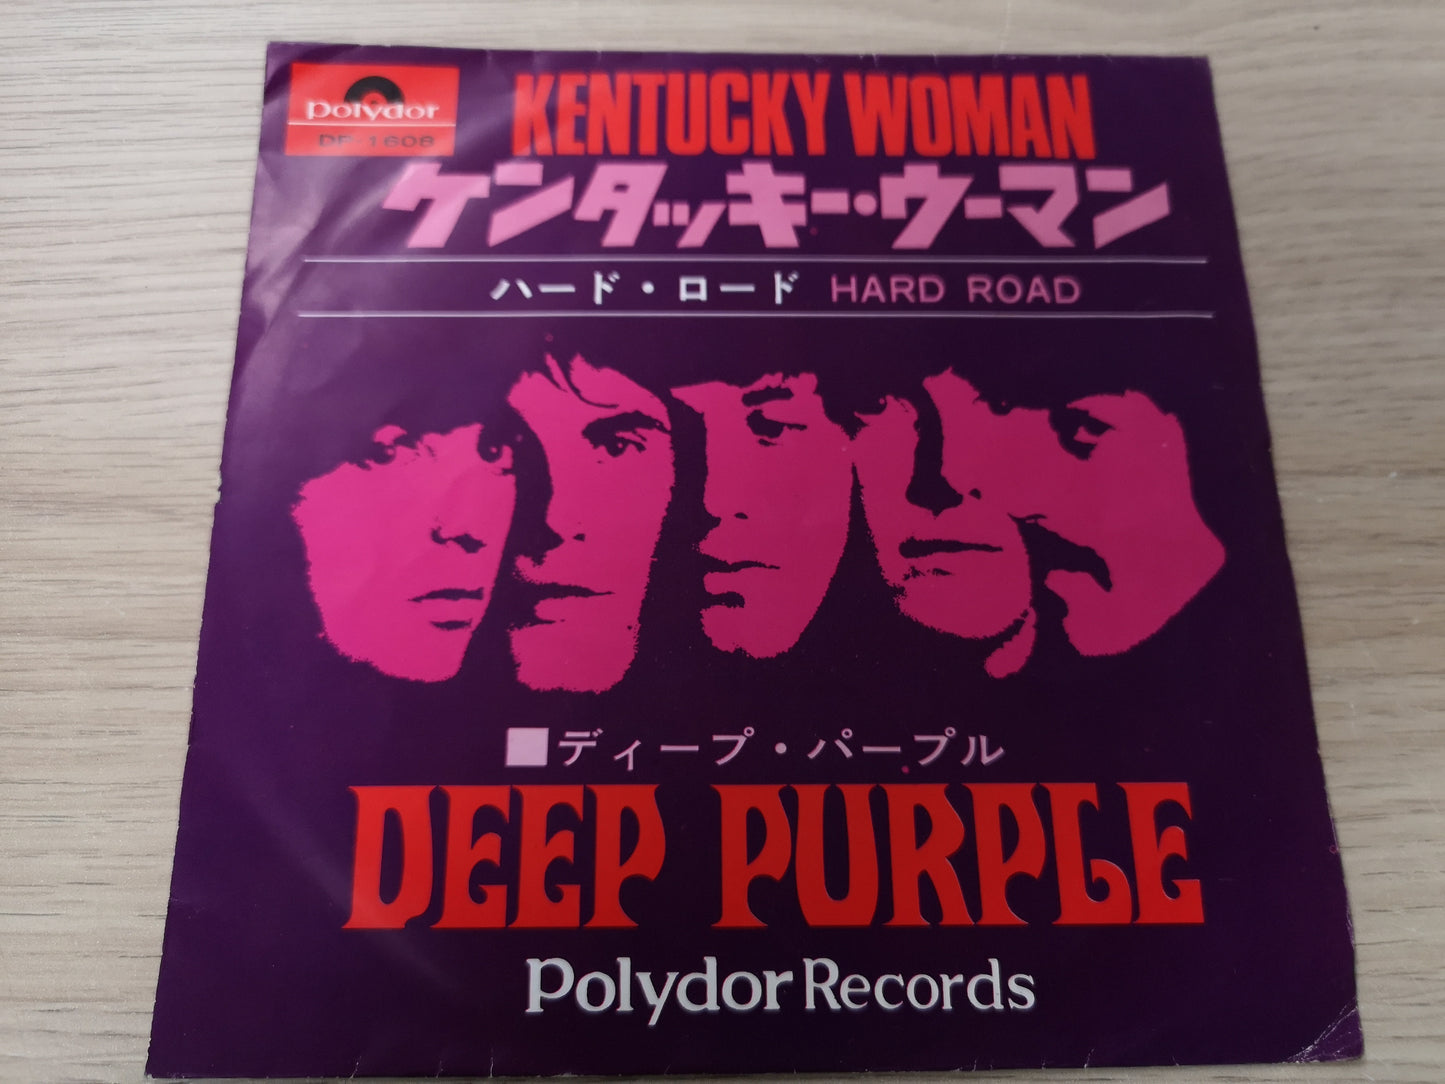 Deep Purple "Kentucky Woman" Orig Japan 1968 EX/EX